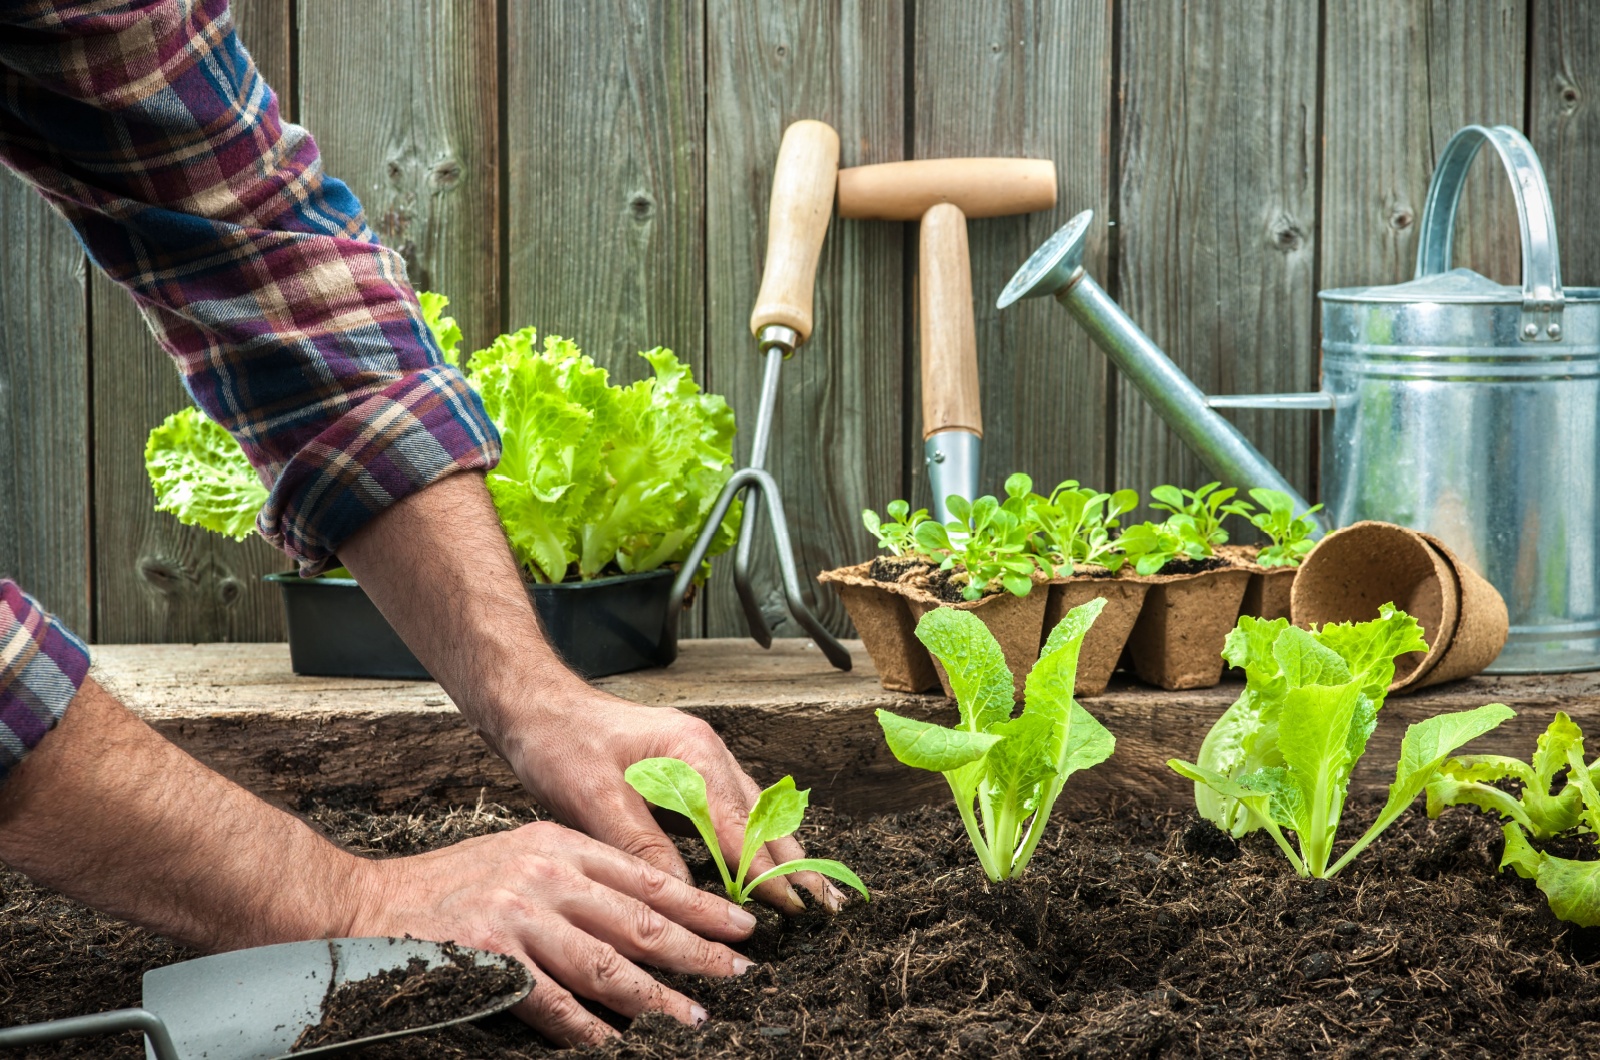 Farmer planting young seedlings of lettuce